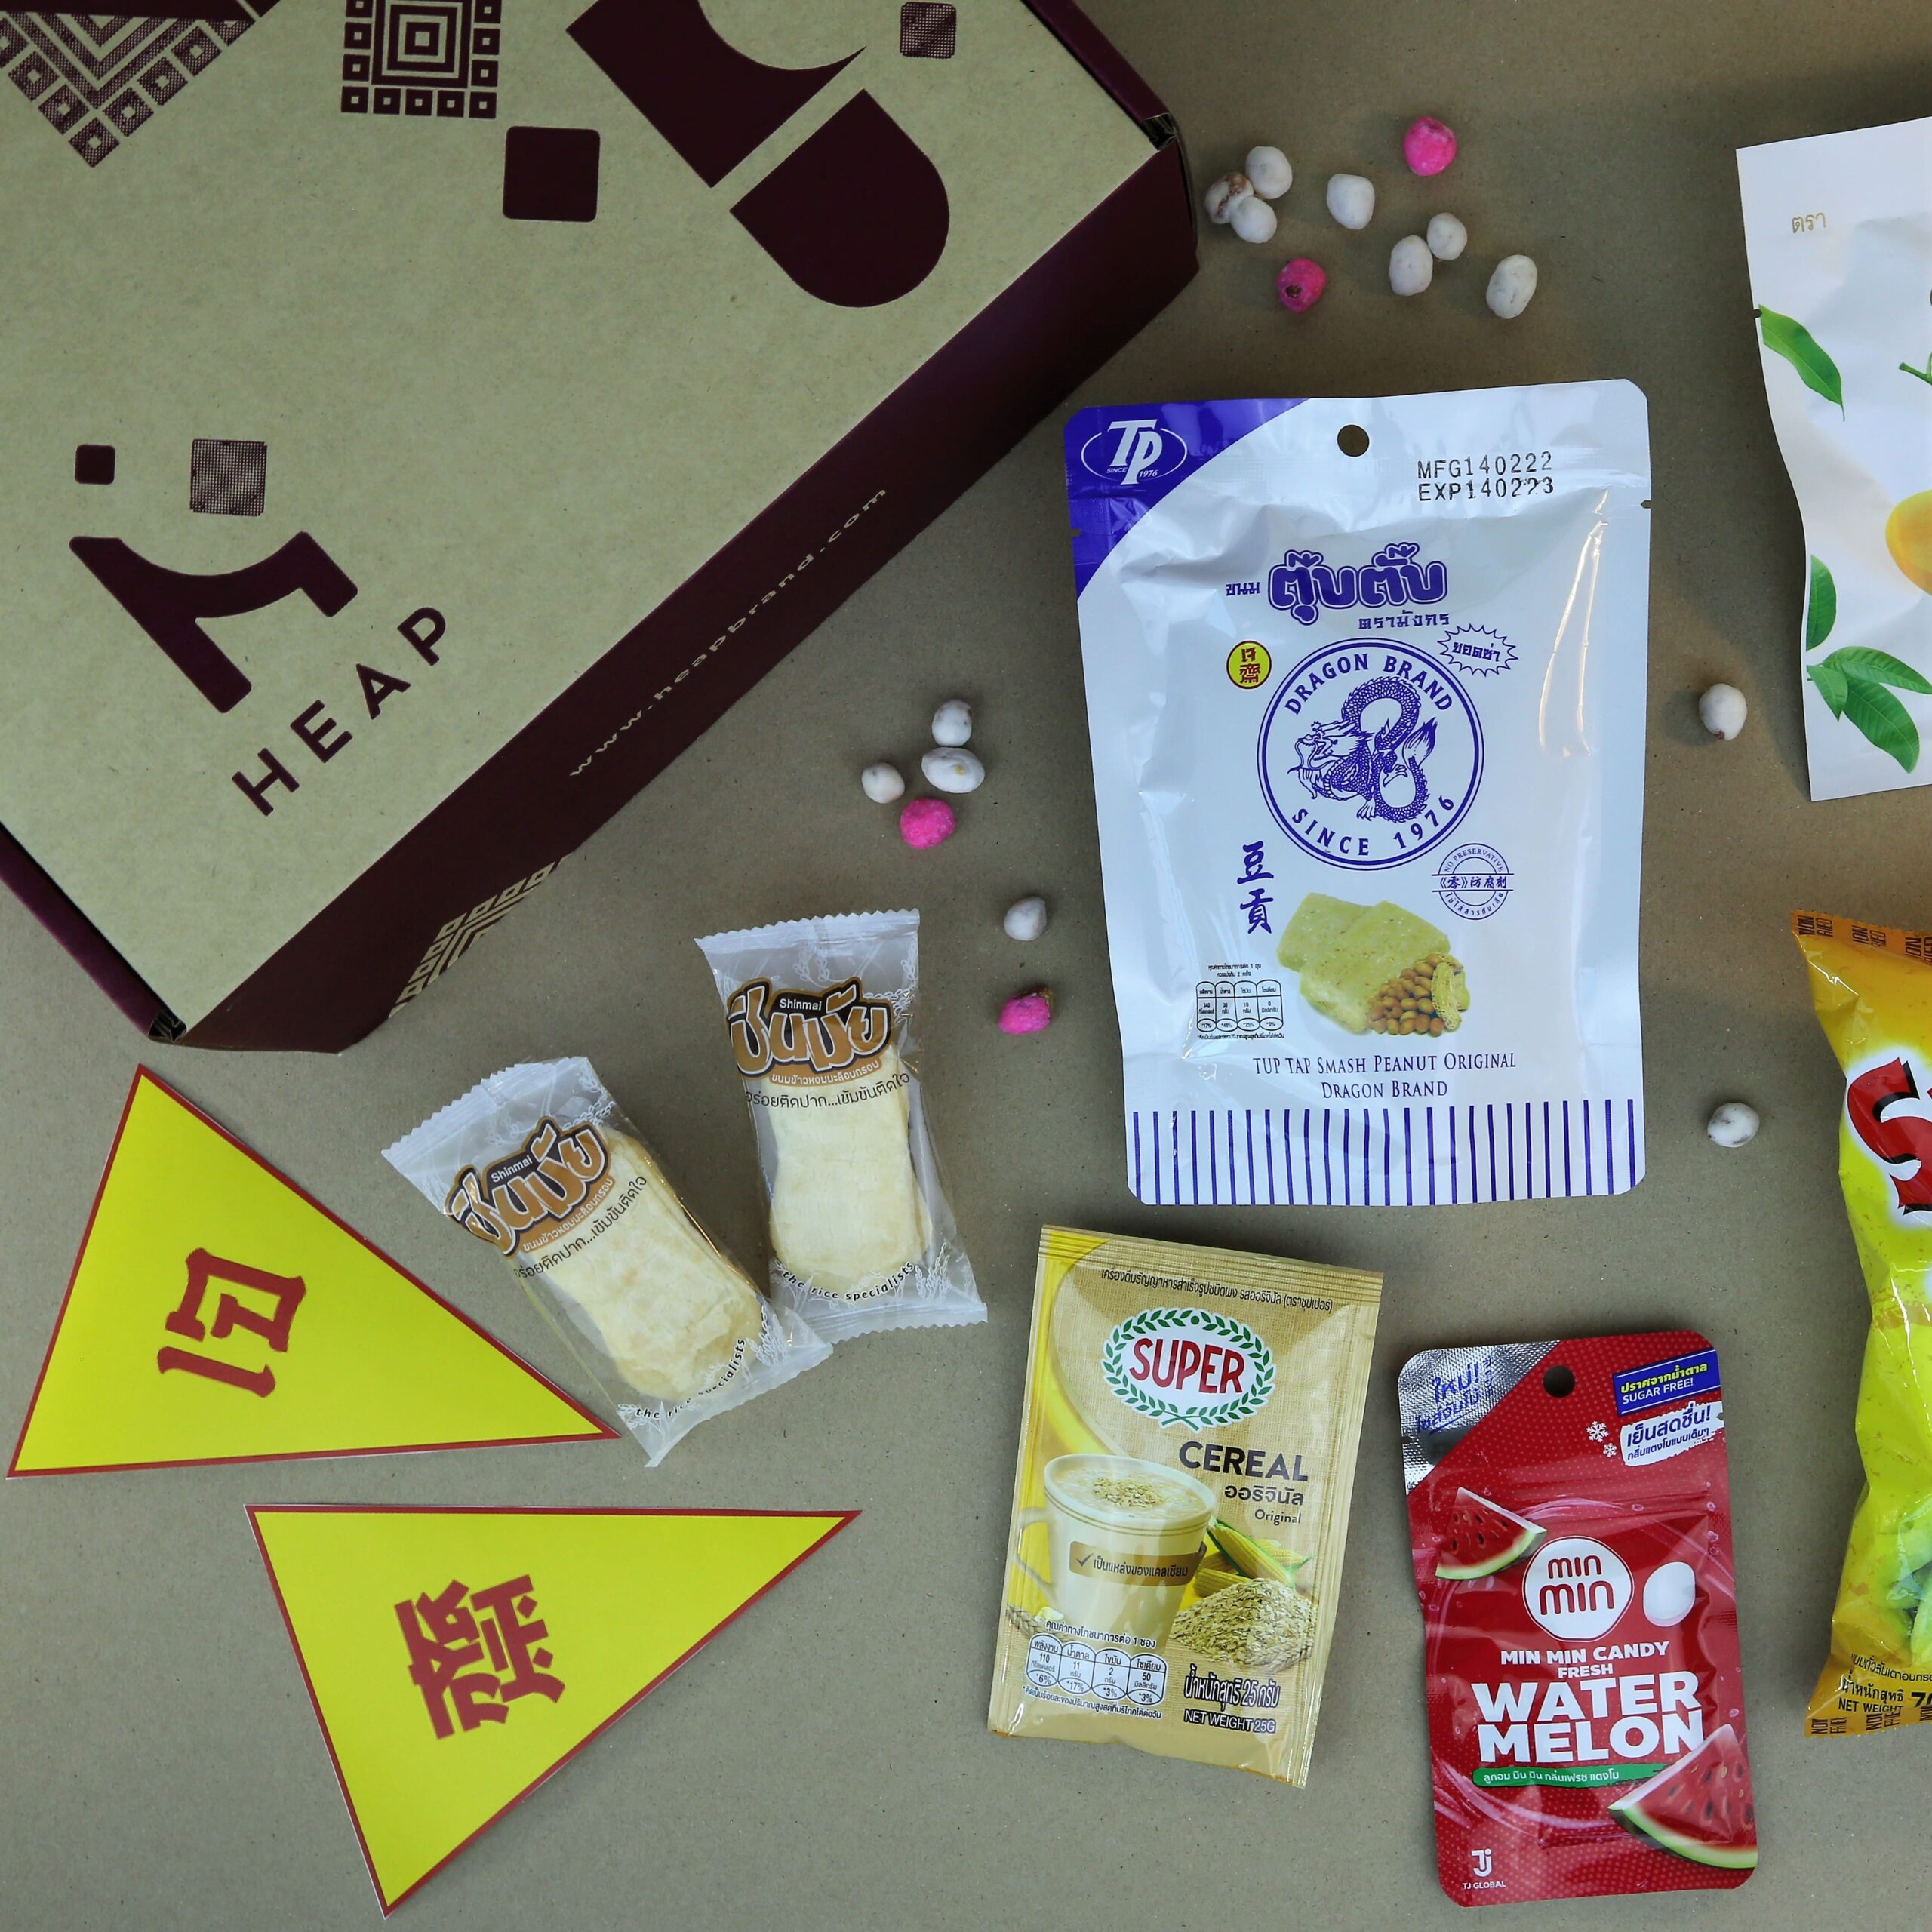 Heap Brand's Thai snack vegan box includes popular vegan snacks shipped from Thailand